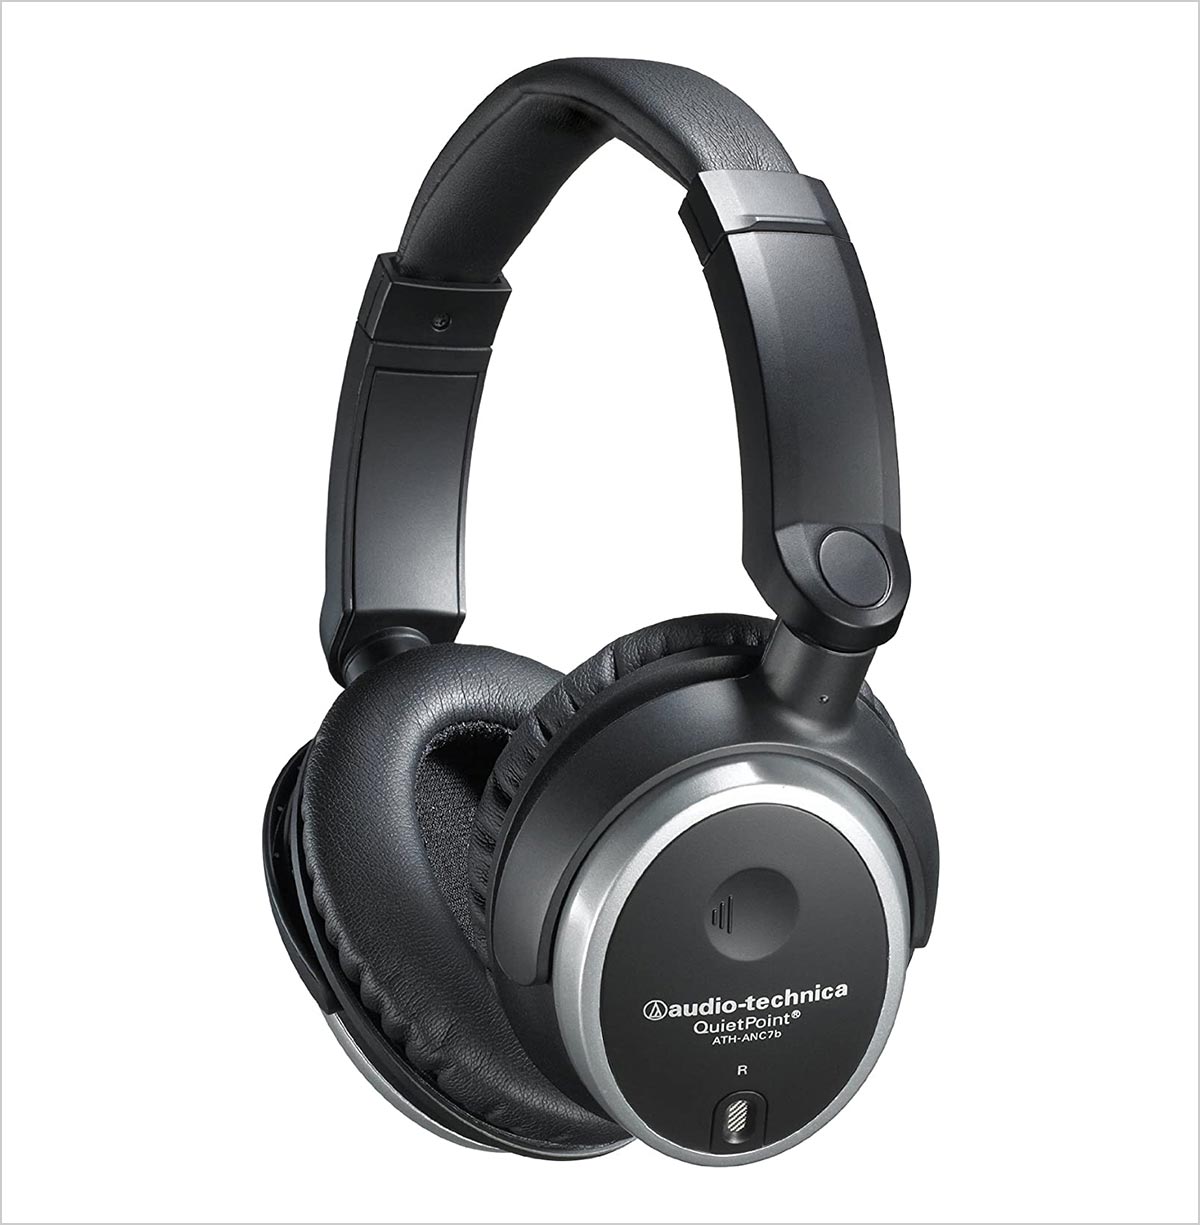 Audio-Technica-ATH-ANC7B-QuietPoint-Active-Noise-Cancelling-Closed-Back-Headphones